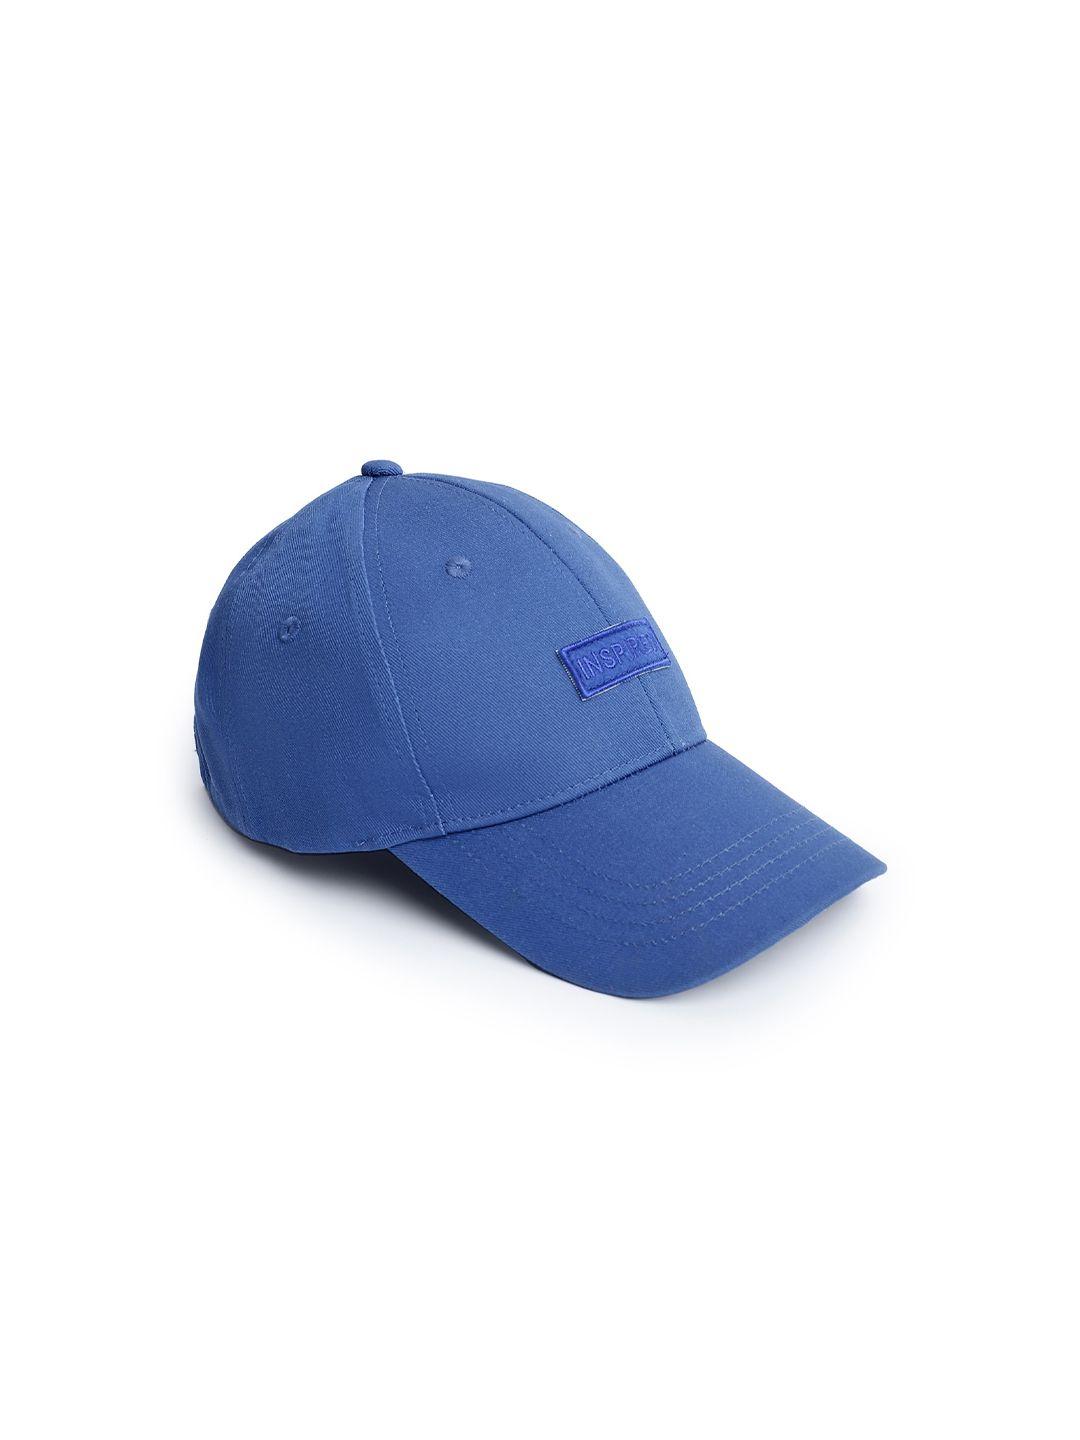 cantabil men blue embroidered baseball cap